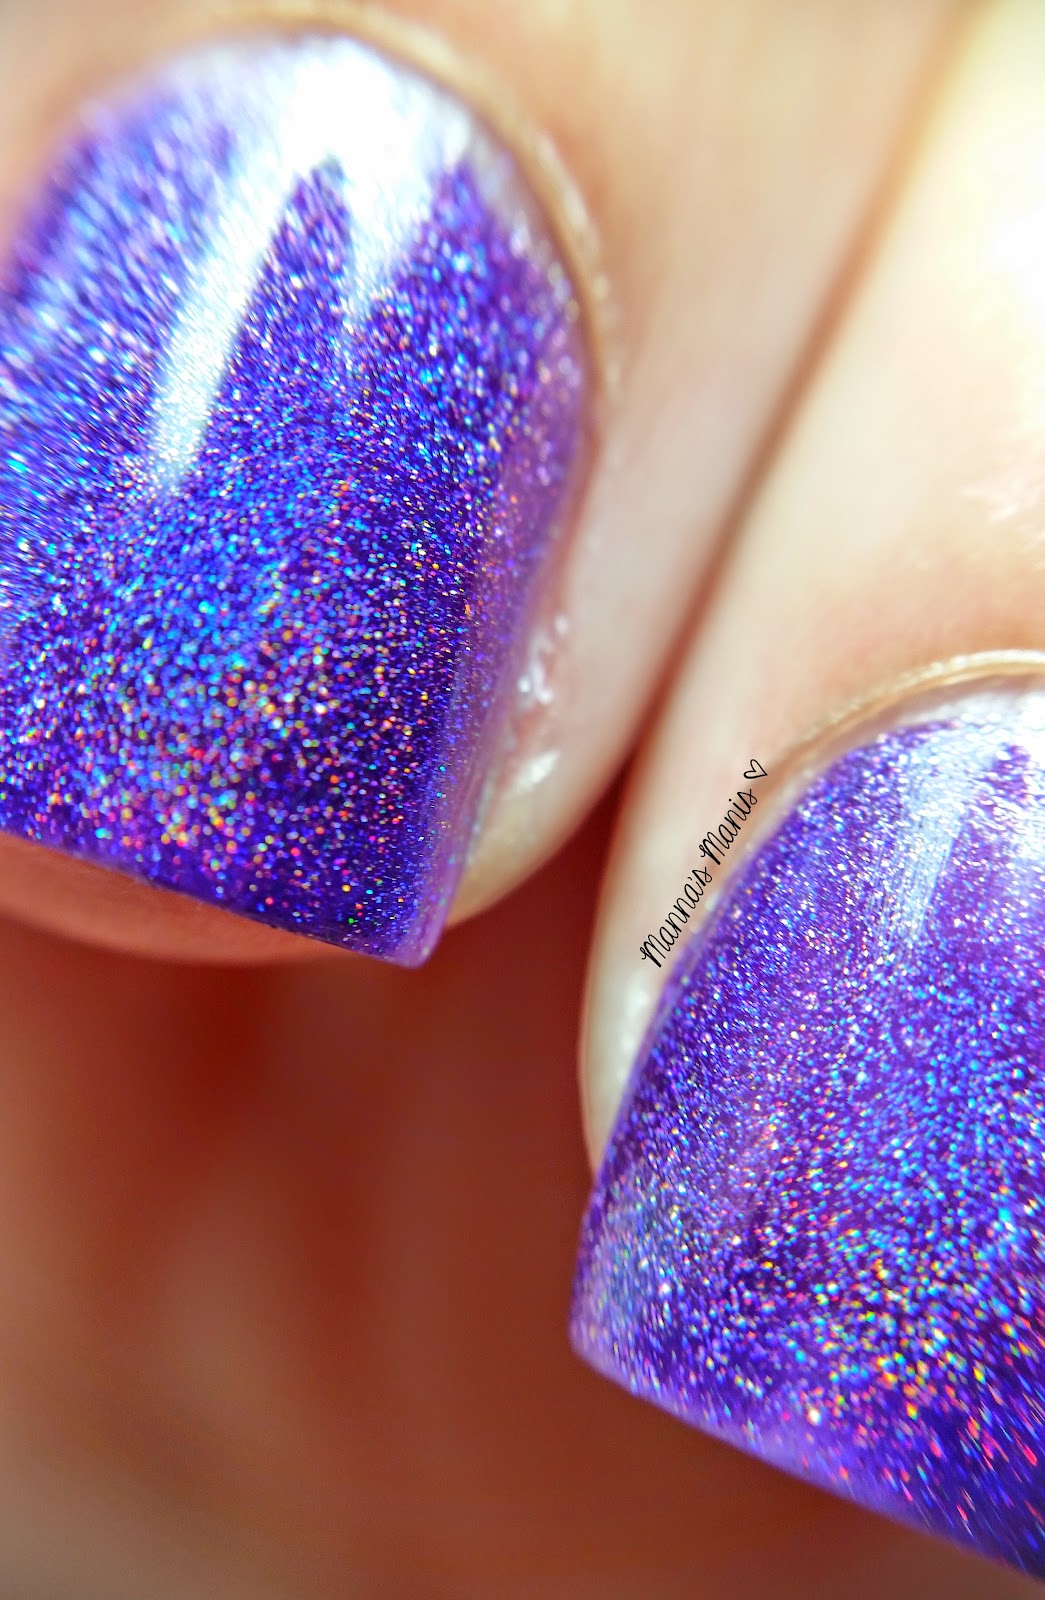 smokey mountain lacquers plumtastic, a purple holographic nail polish